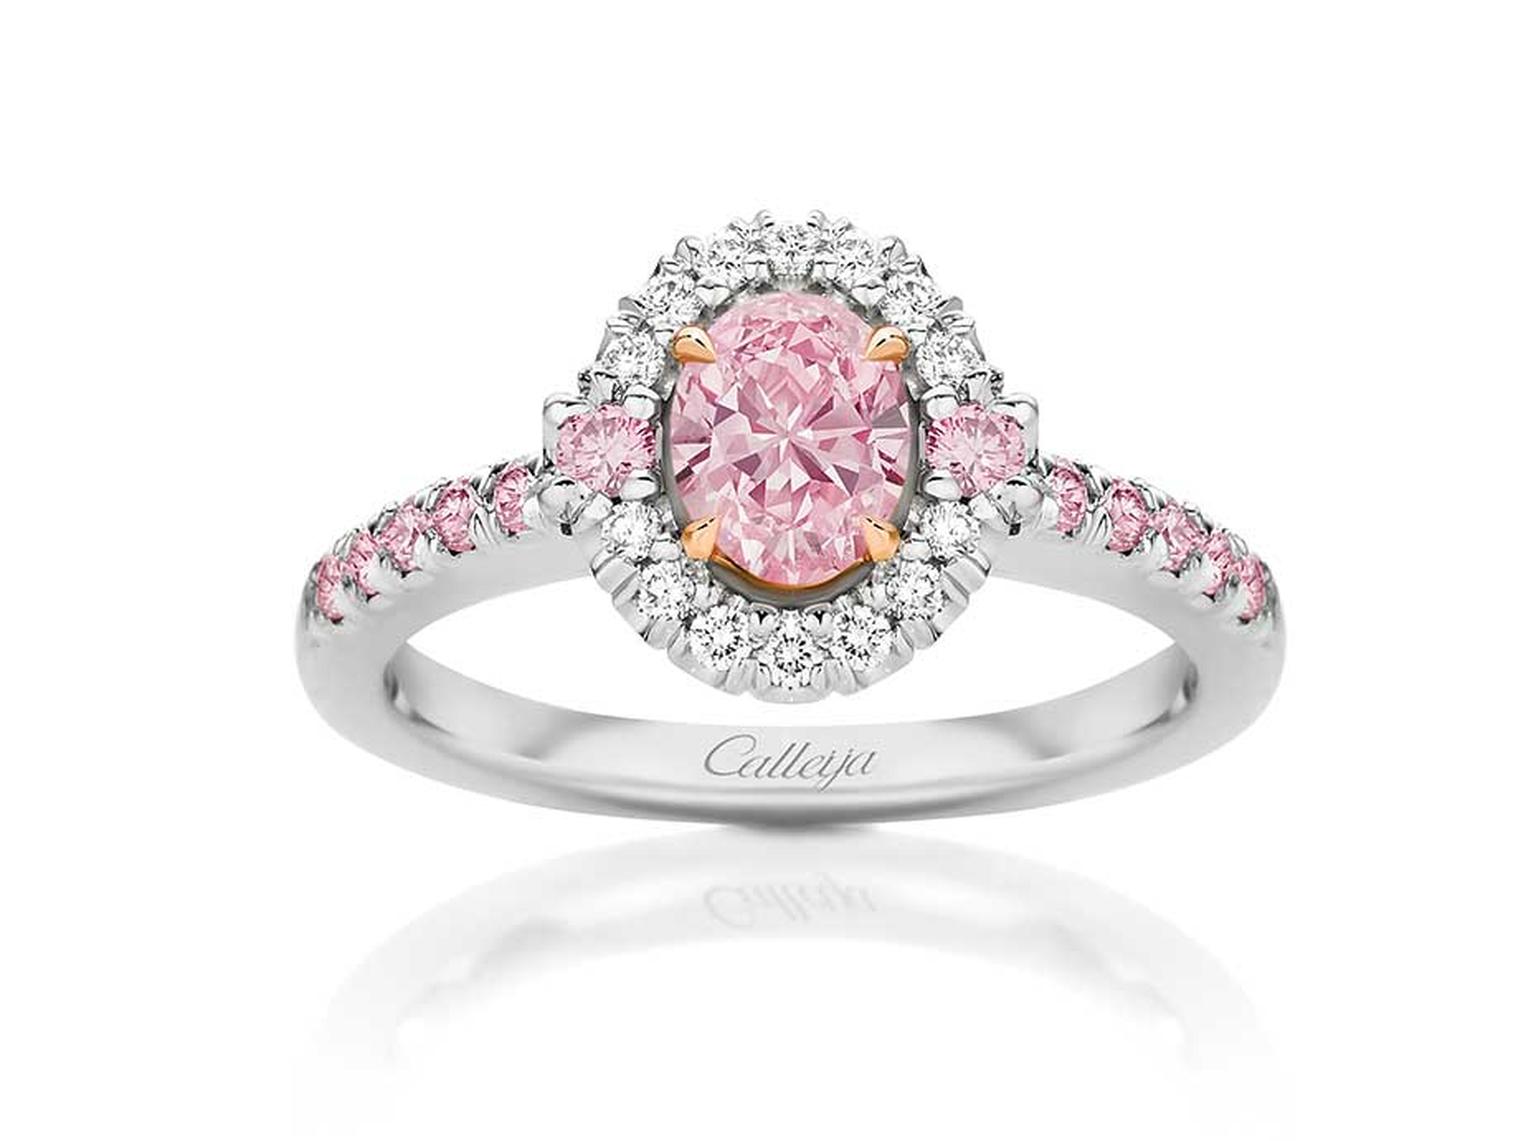 Calleija Elyssa brilliant-cut Argyle pink diamond ring surrounded by white and pink pavé diamonds.